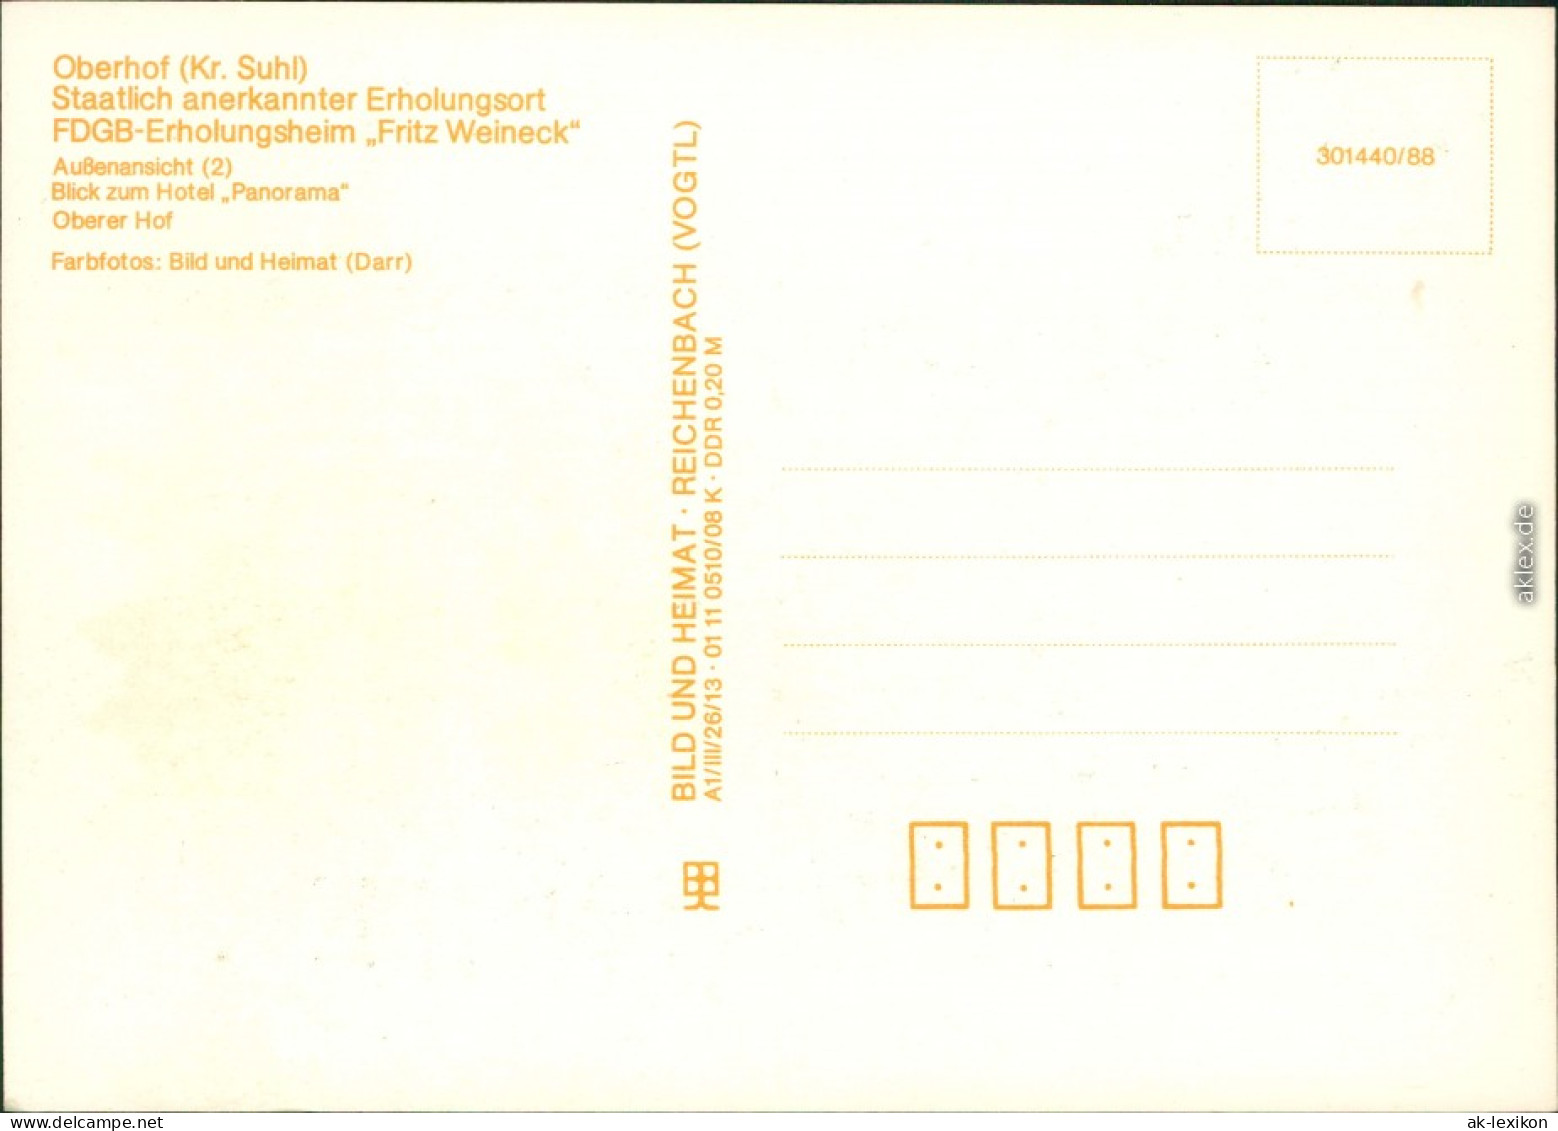 Oberhof (Thüringen) FDGB-Erholungsheim "Fritz Weineck" - Außenansicht 1988 - Oberhof